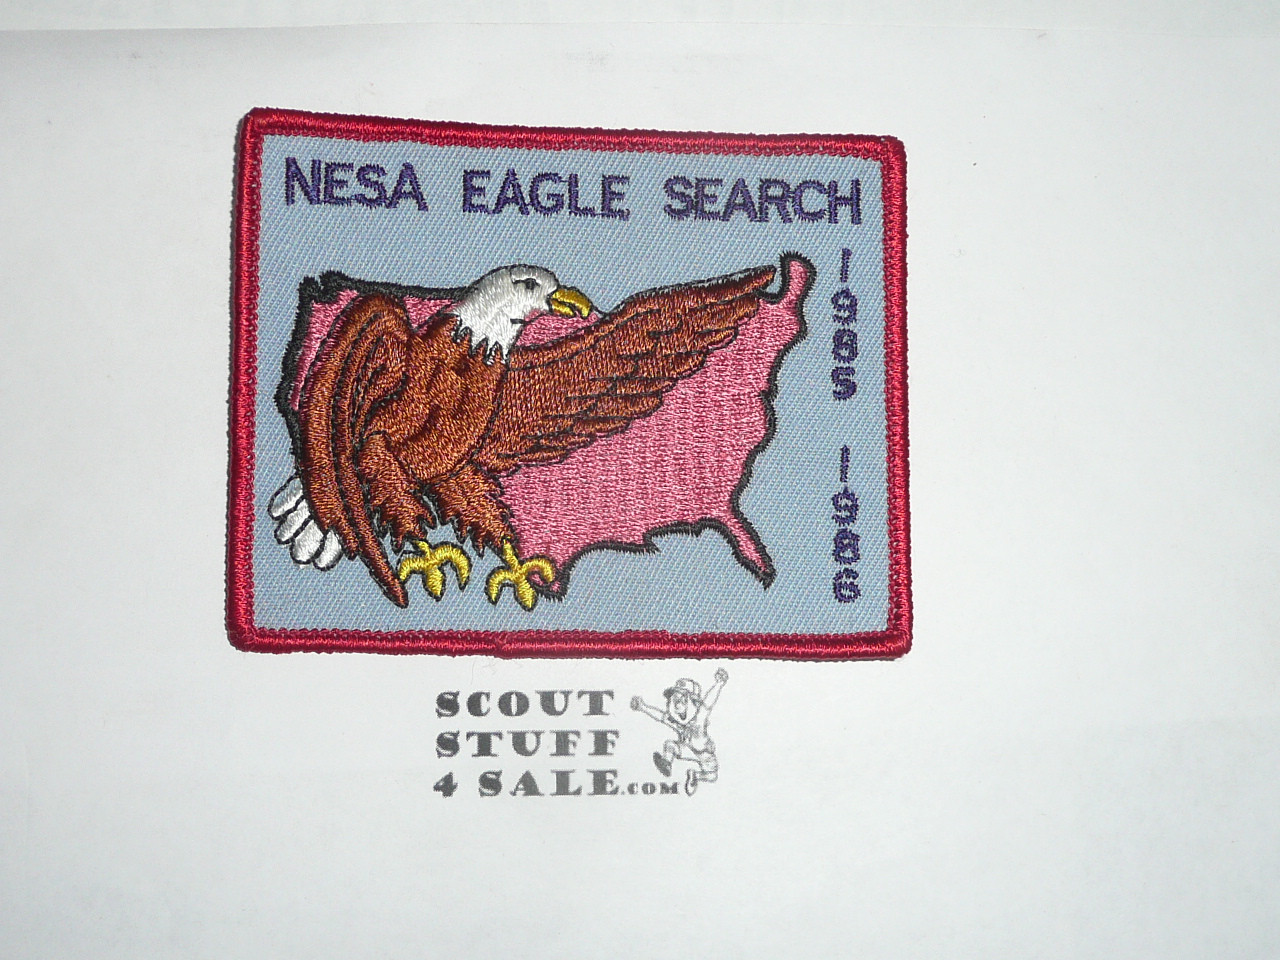 National Eagle Scout Association, 1985-1986 Eagle Search Patch